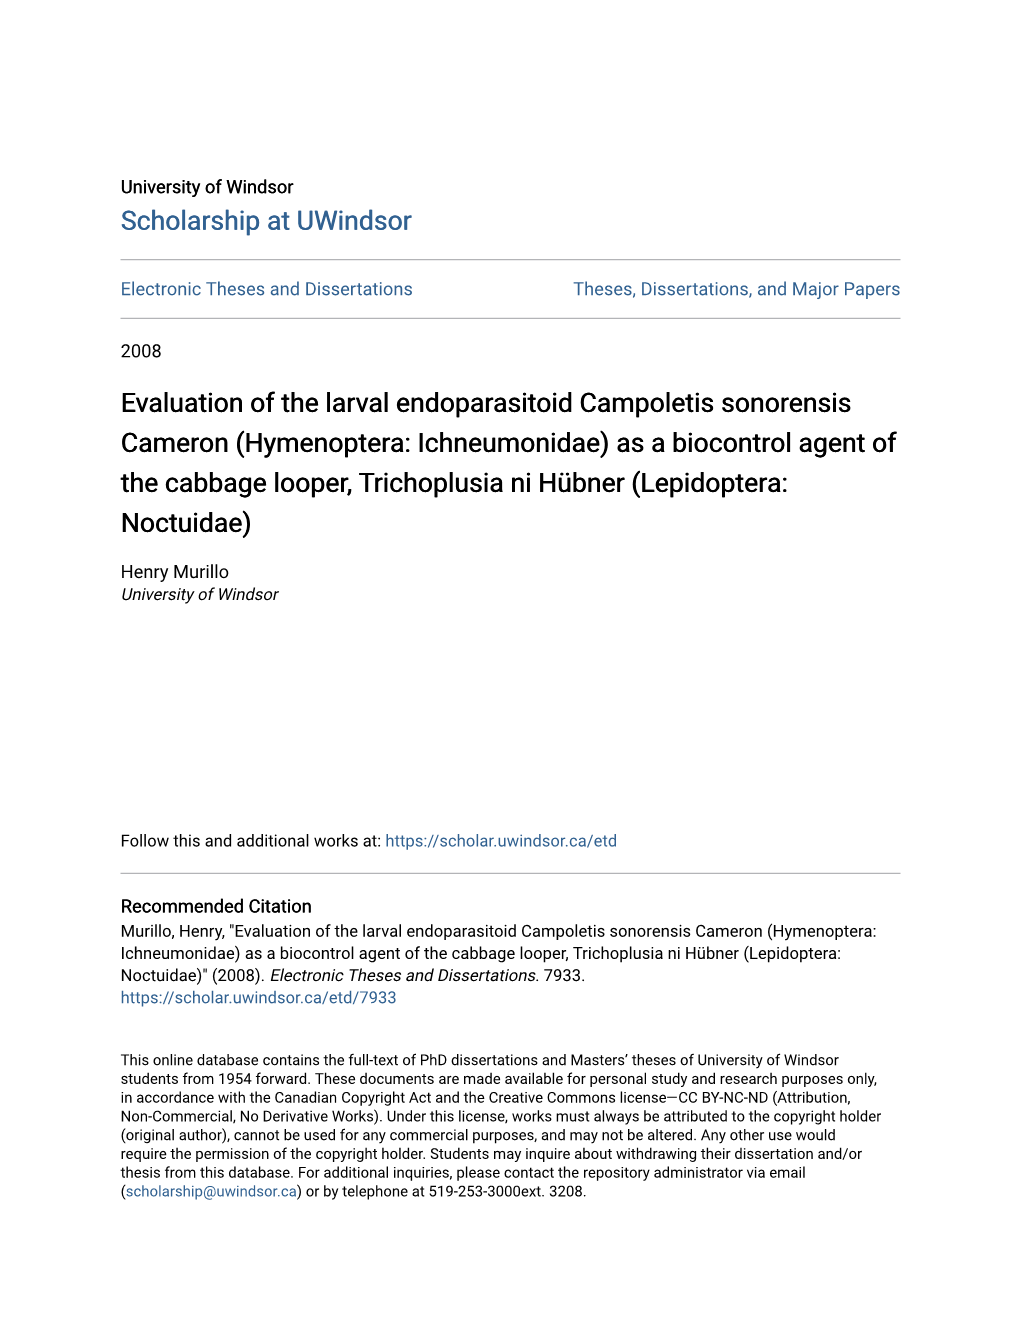 Evaluation of the Larval Endoparasitoid Campoletis Sonorensis Cameron